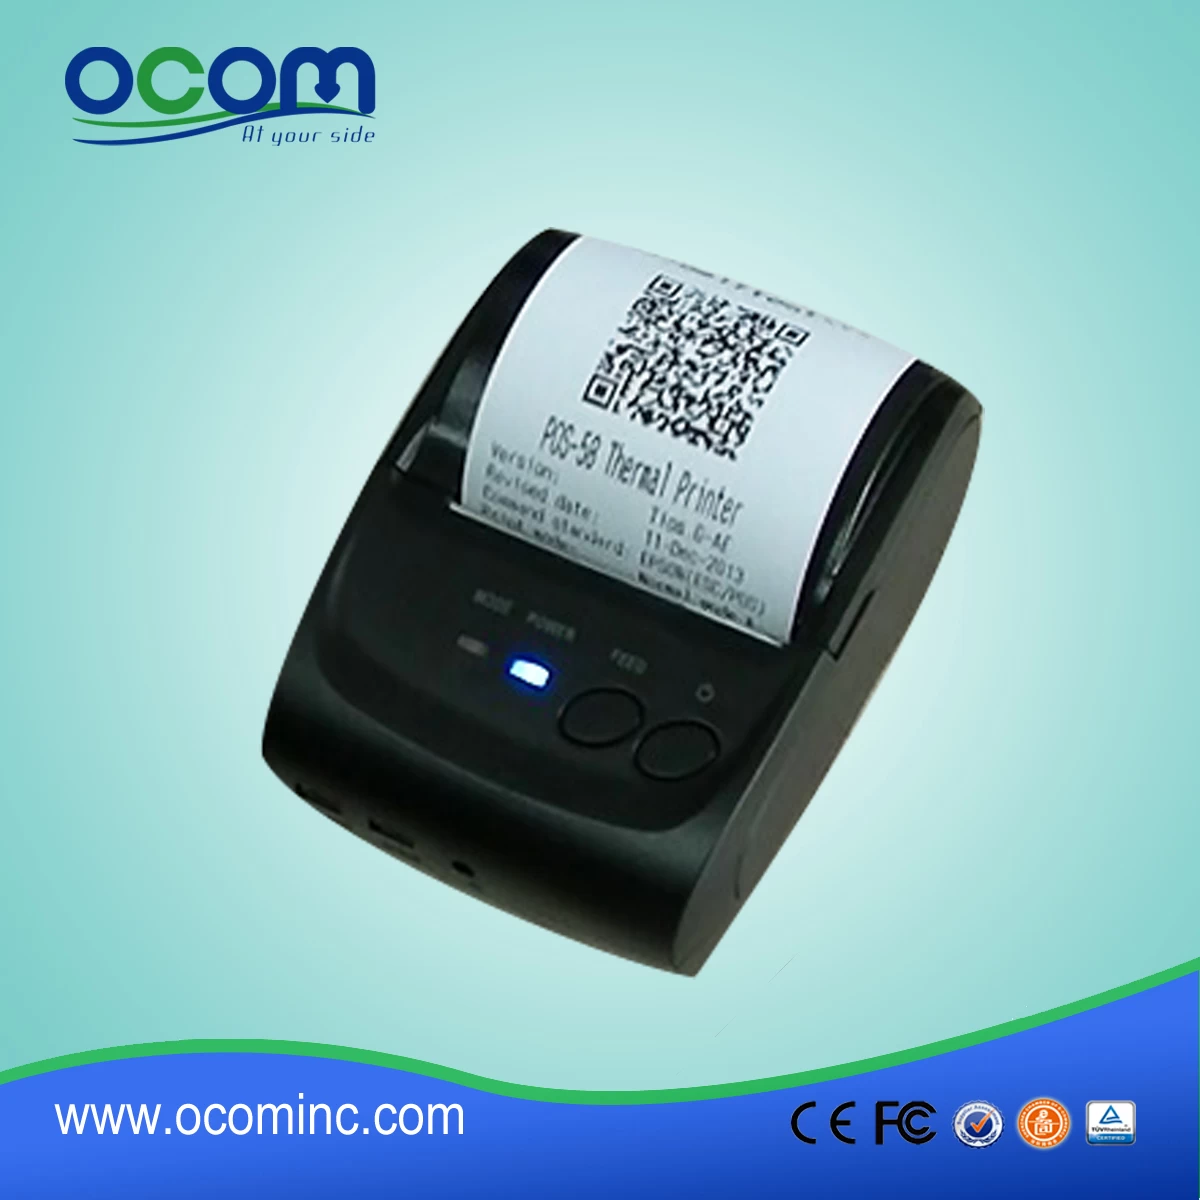 58mm Android Portable USB Bluetooth Thermal Printer--OCPP-M05